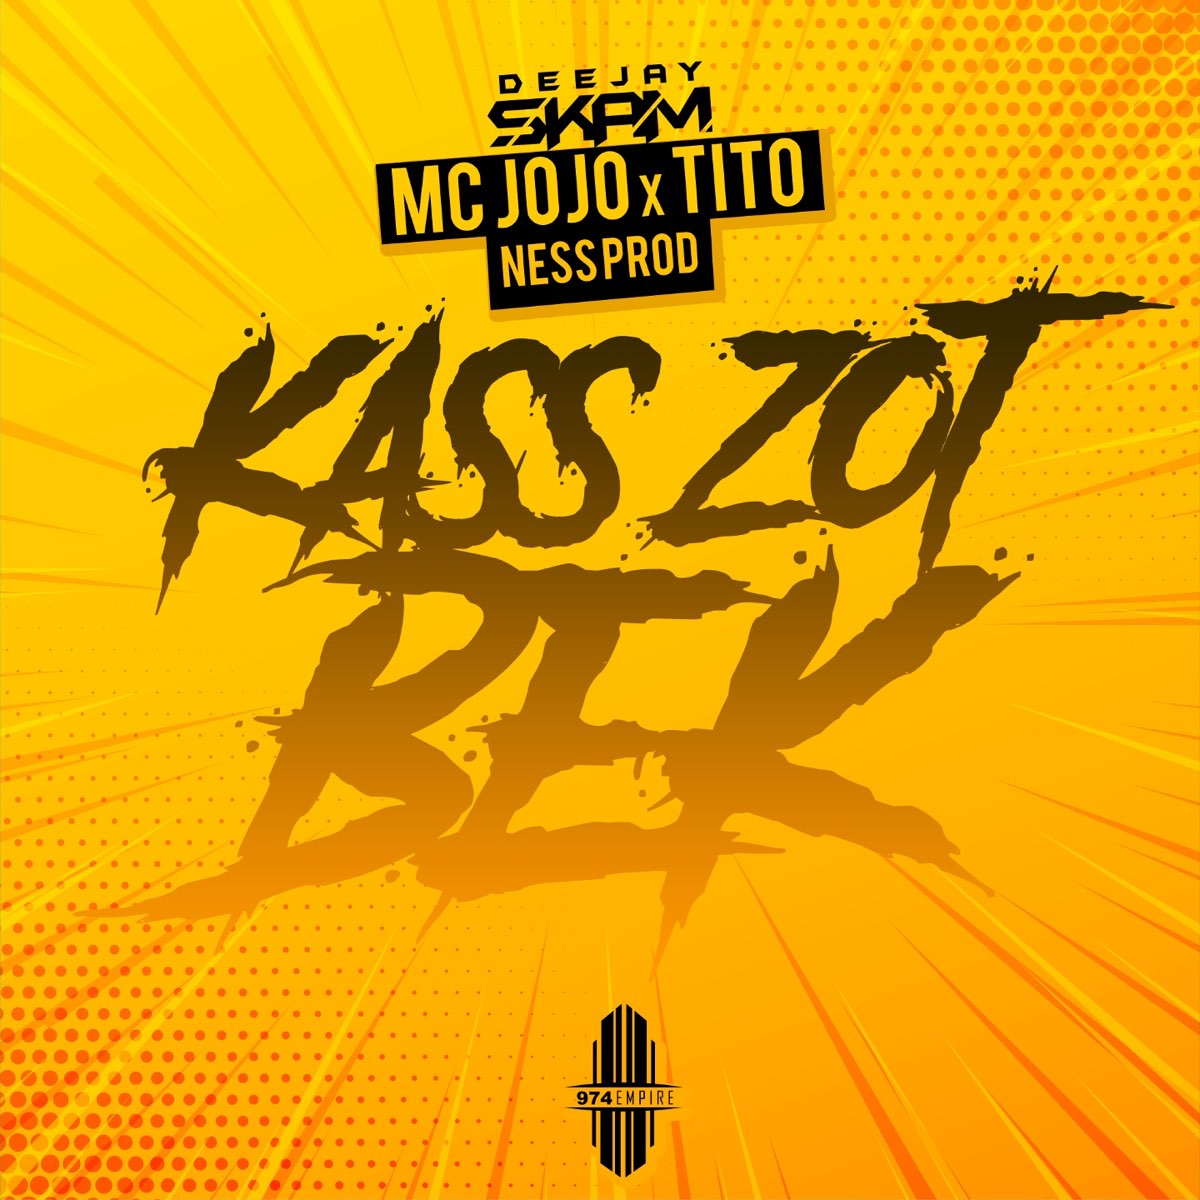 Kass zot bek - Single par Dj Skam, MC JoJo & Tito sur Apple Music